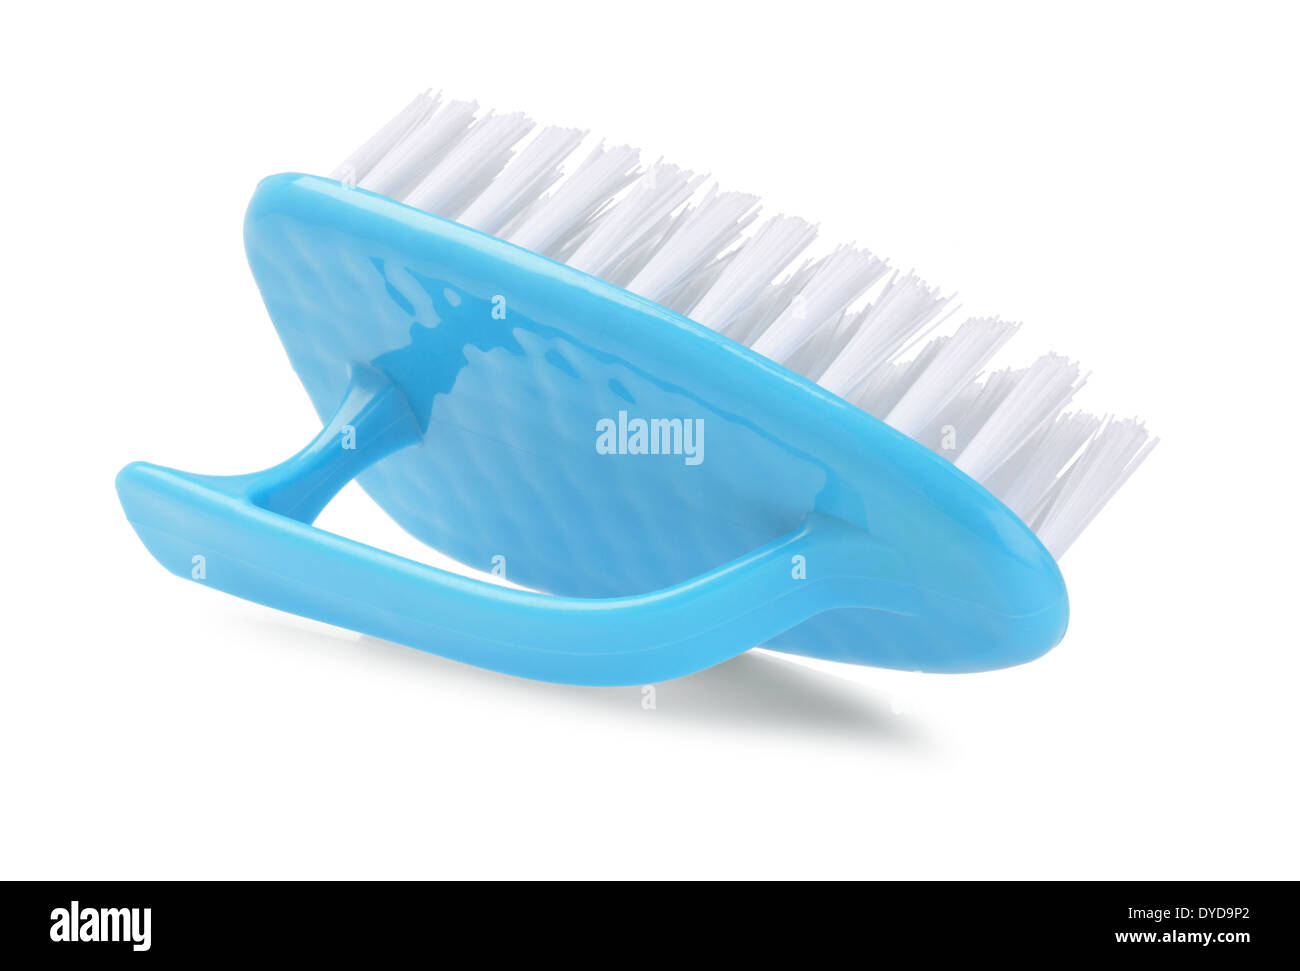 Household Plastic Cleaning Brush On White Background Stock Photo